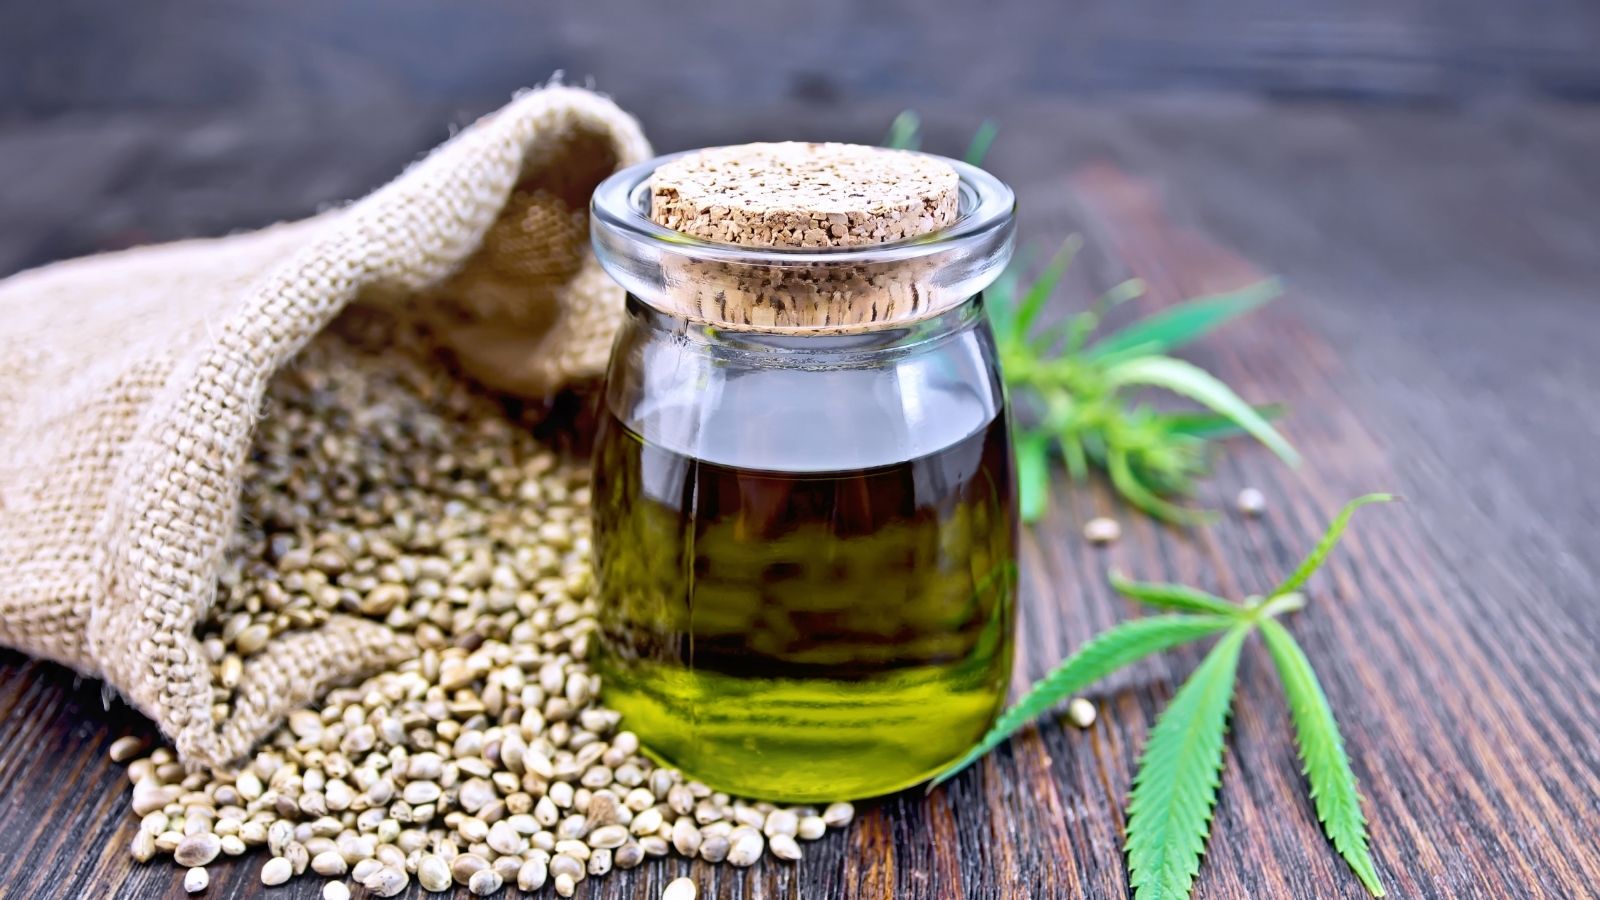 Jar of cannabis oil displayed with hempseeds and cannabis leaf.